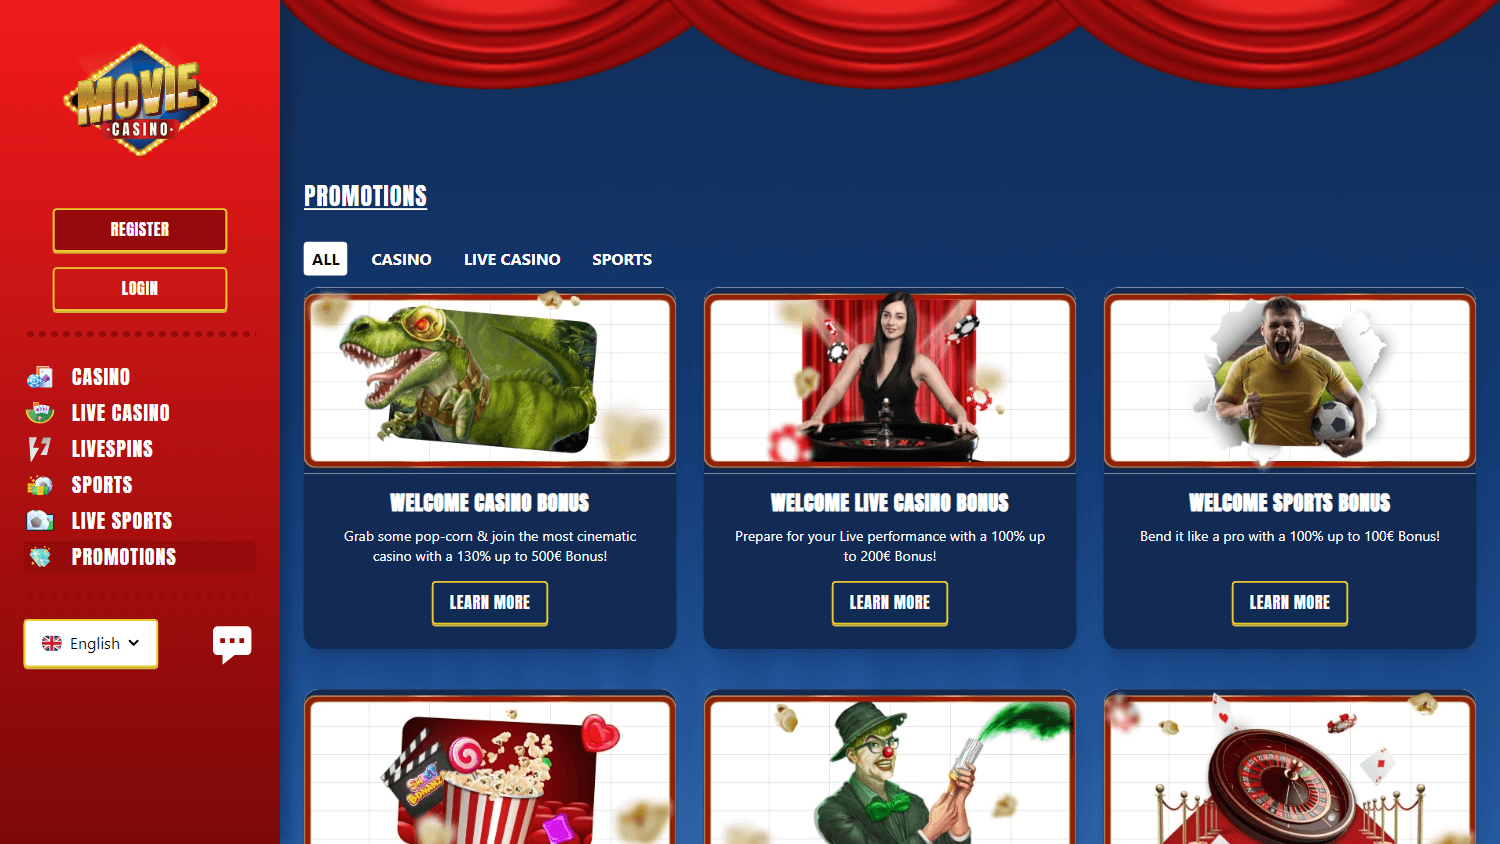 movie_casino_promotions_desktop